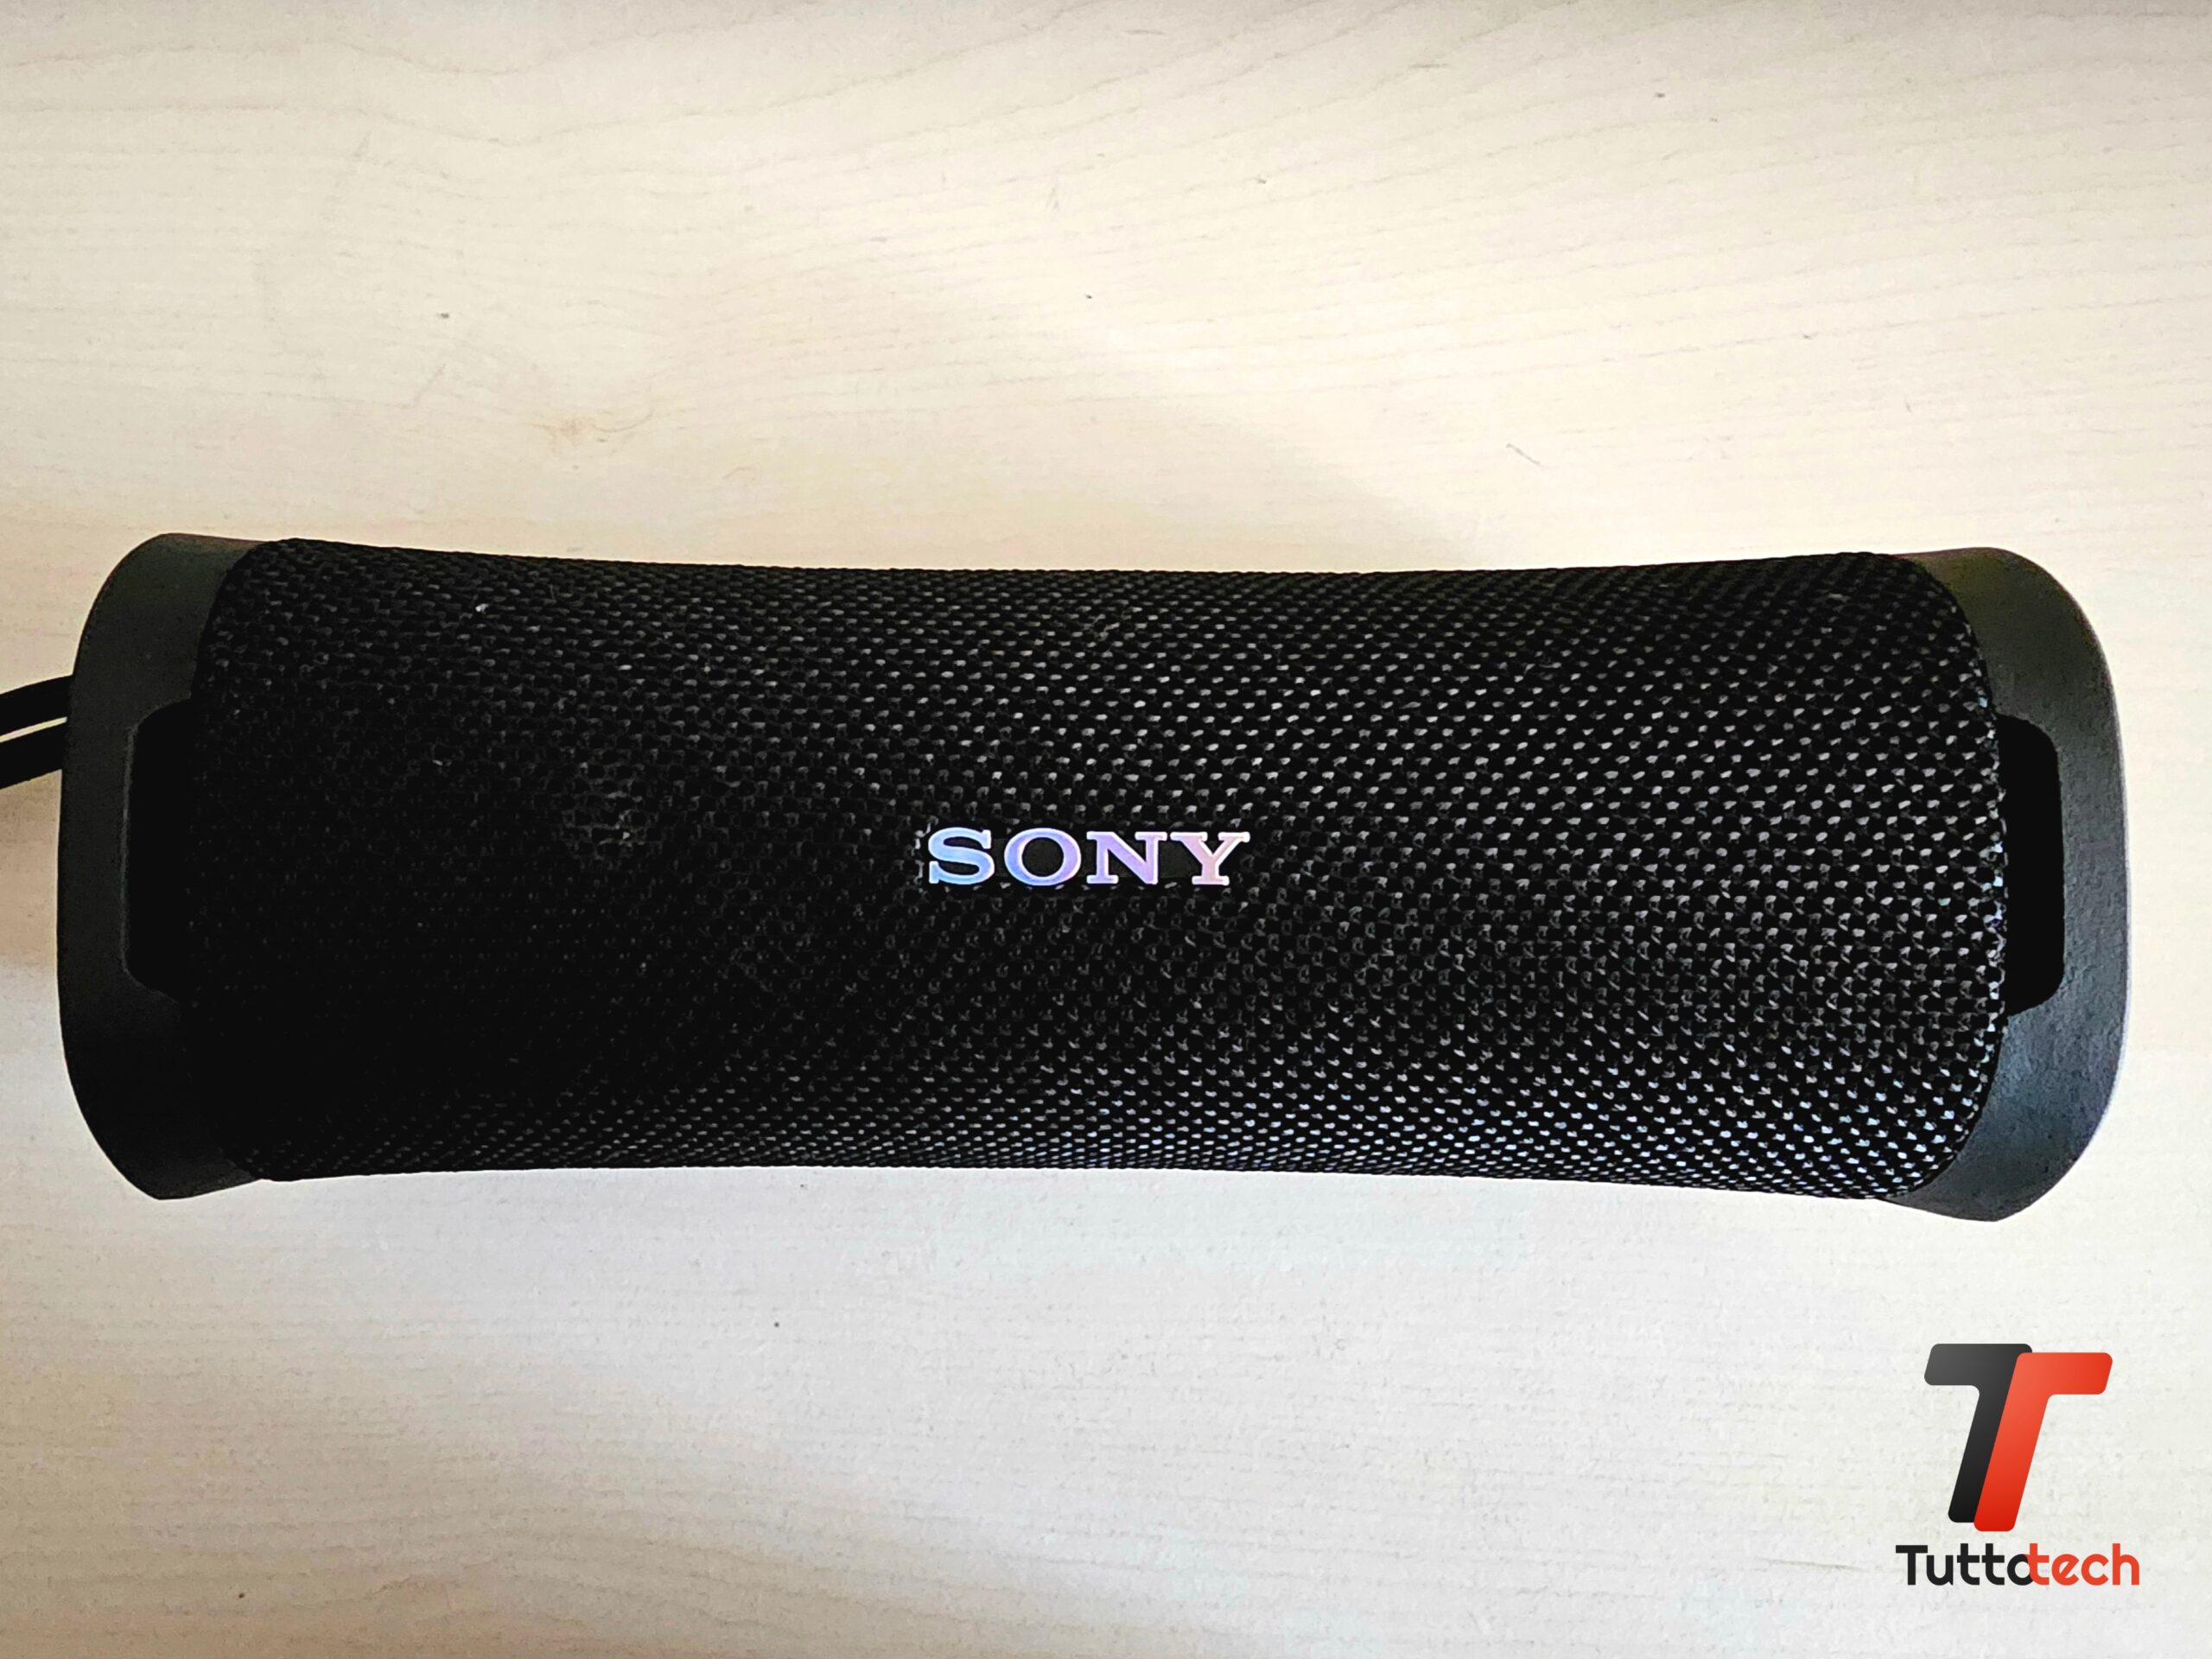 Recensione Sony ULT Field 1, speaker rugged che punta tutto sui bassi 1